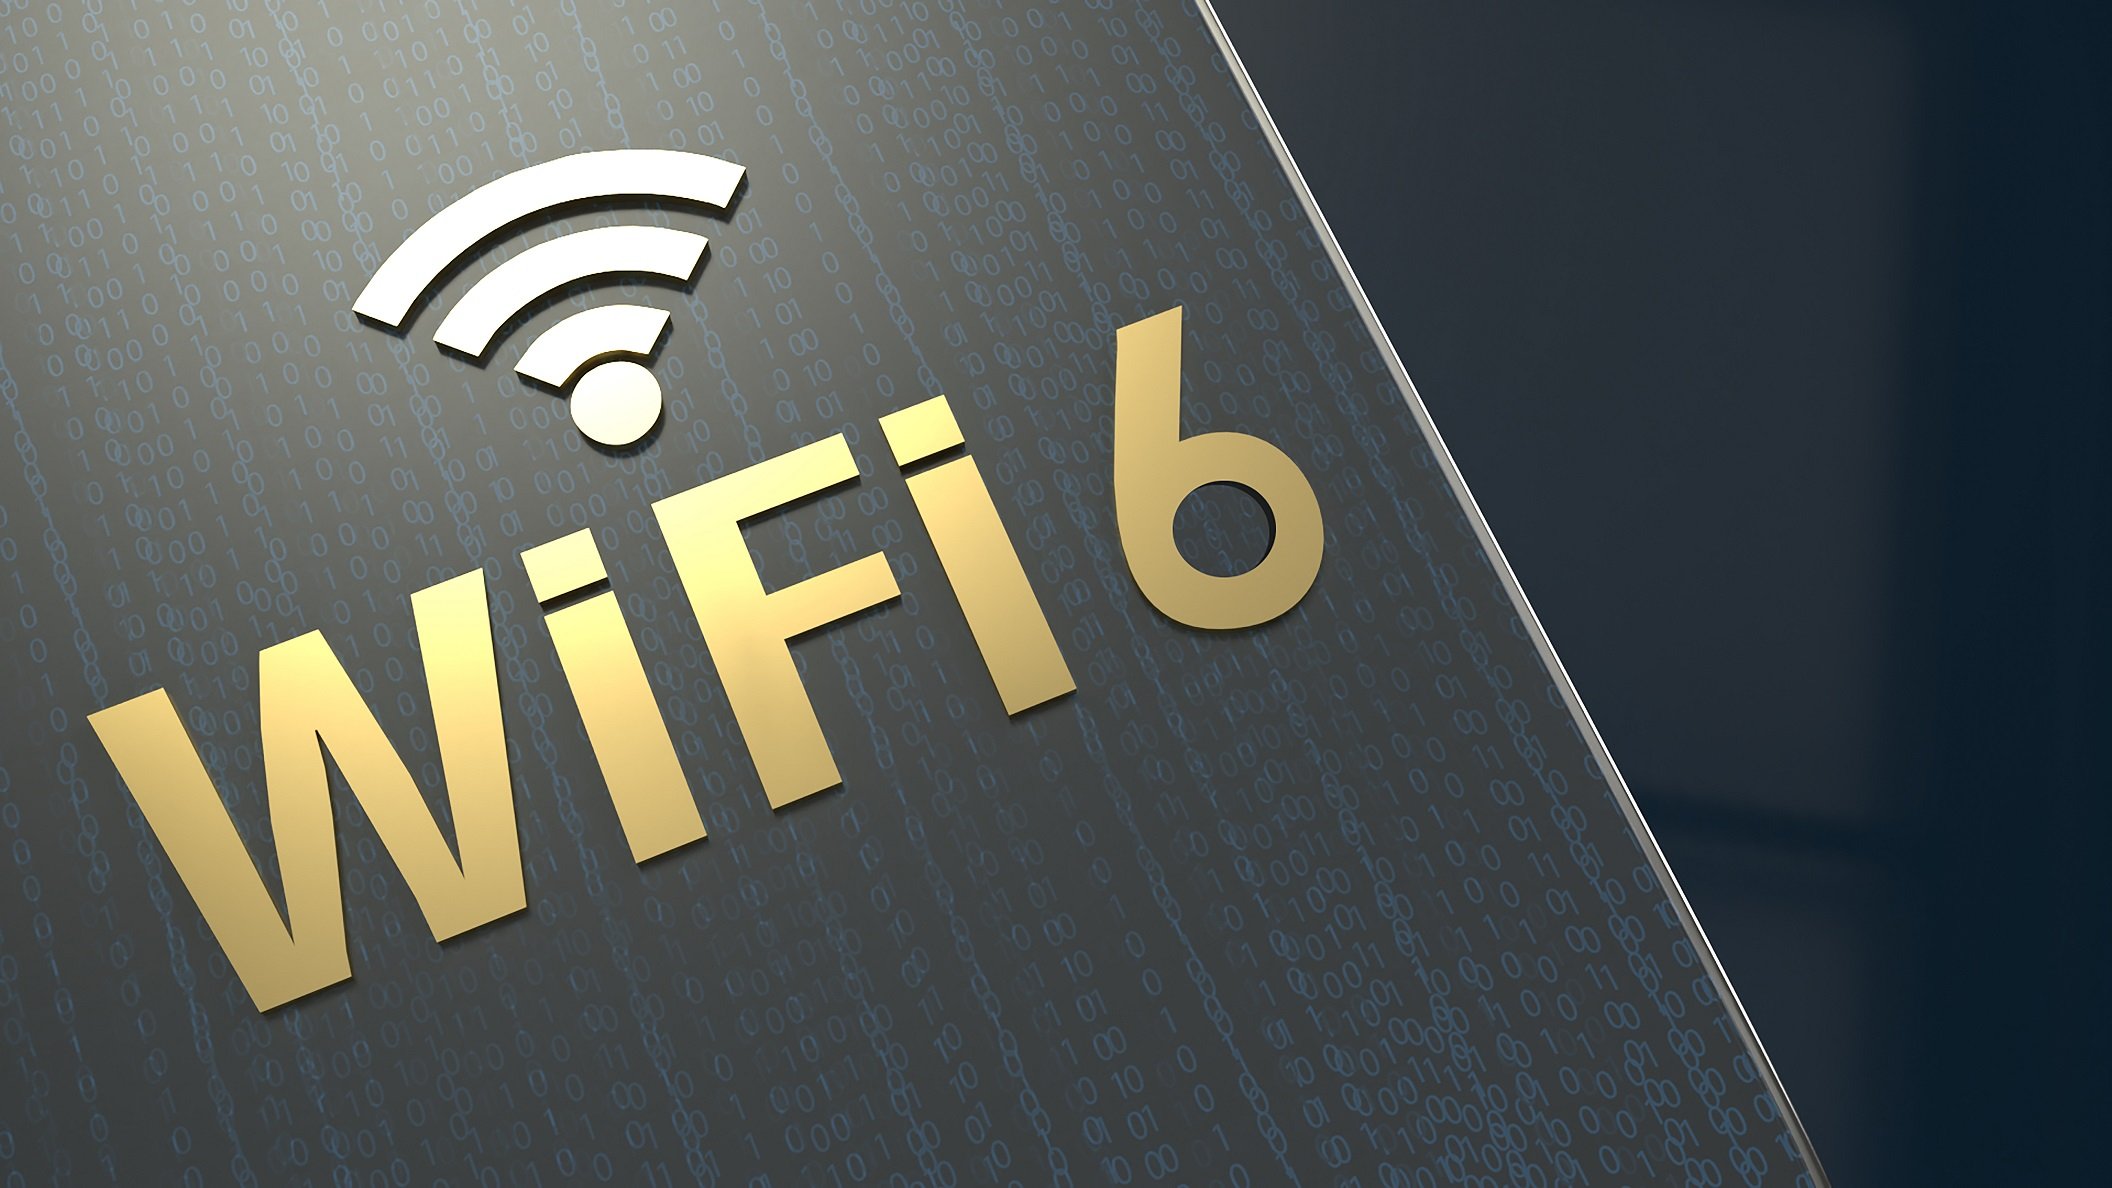 WLAN Standard Wifi 6 Symbol